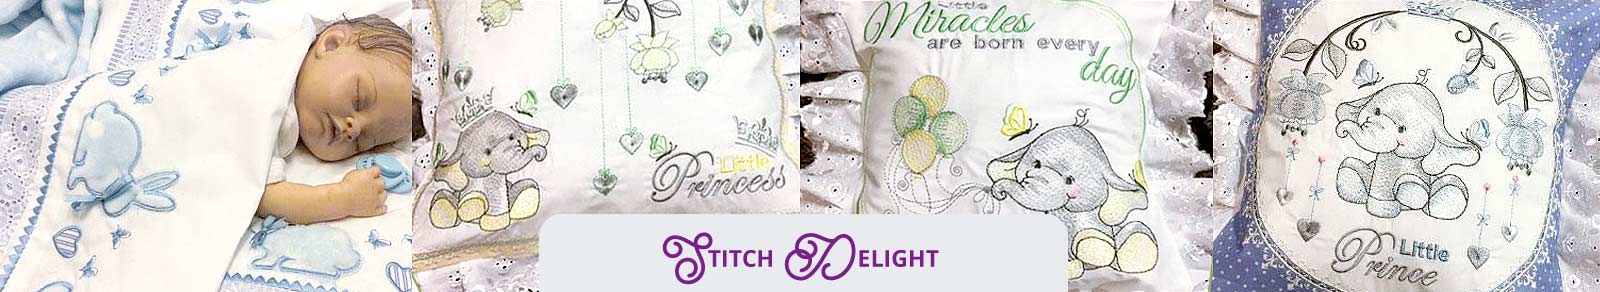 stitch delight